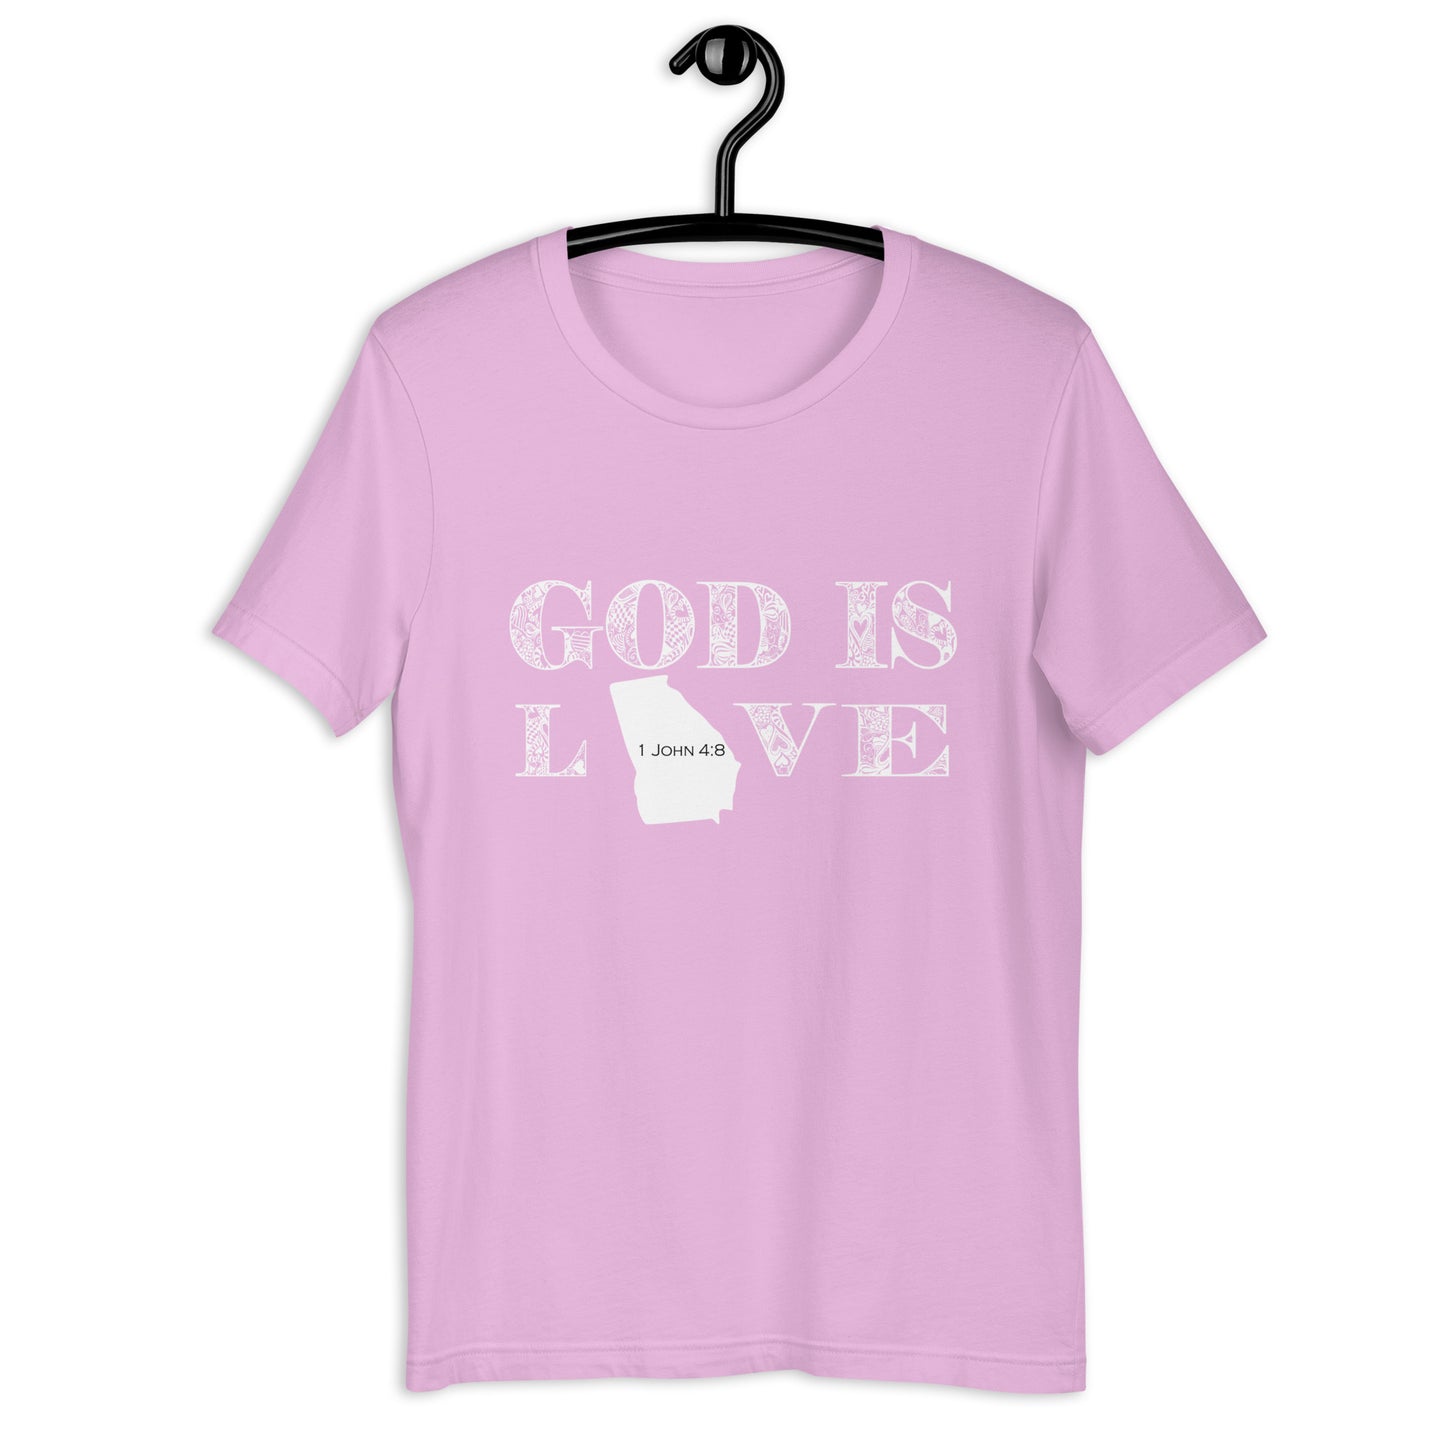 1 John 4:8 God is love Georgia T-shirt lilac